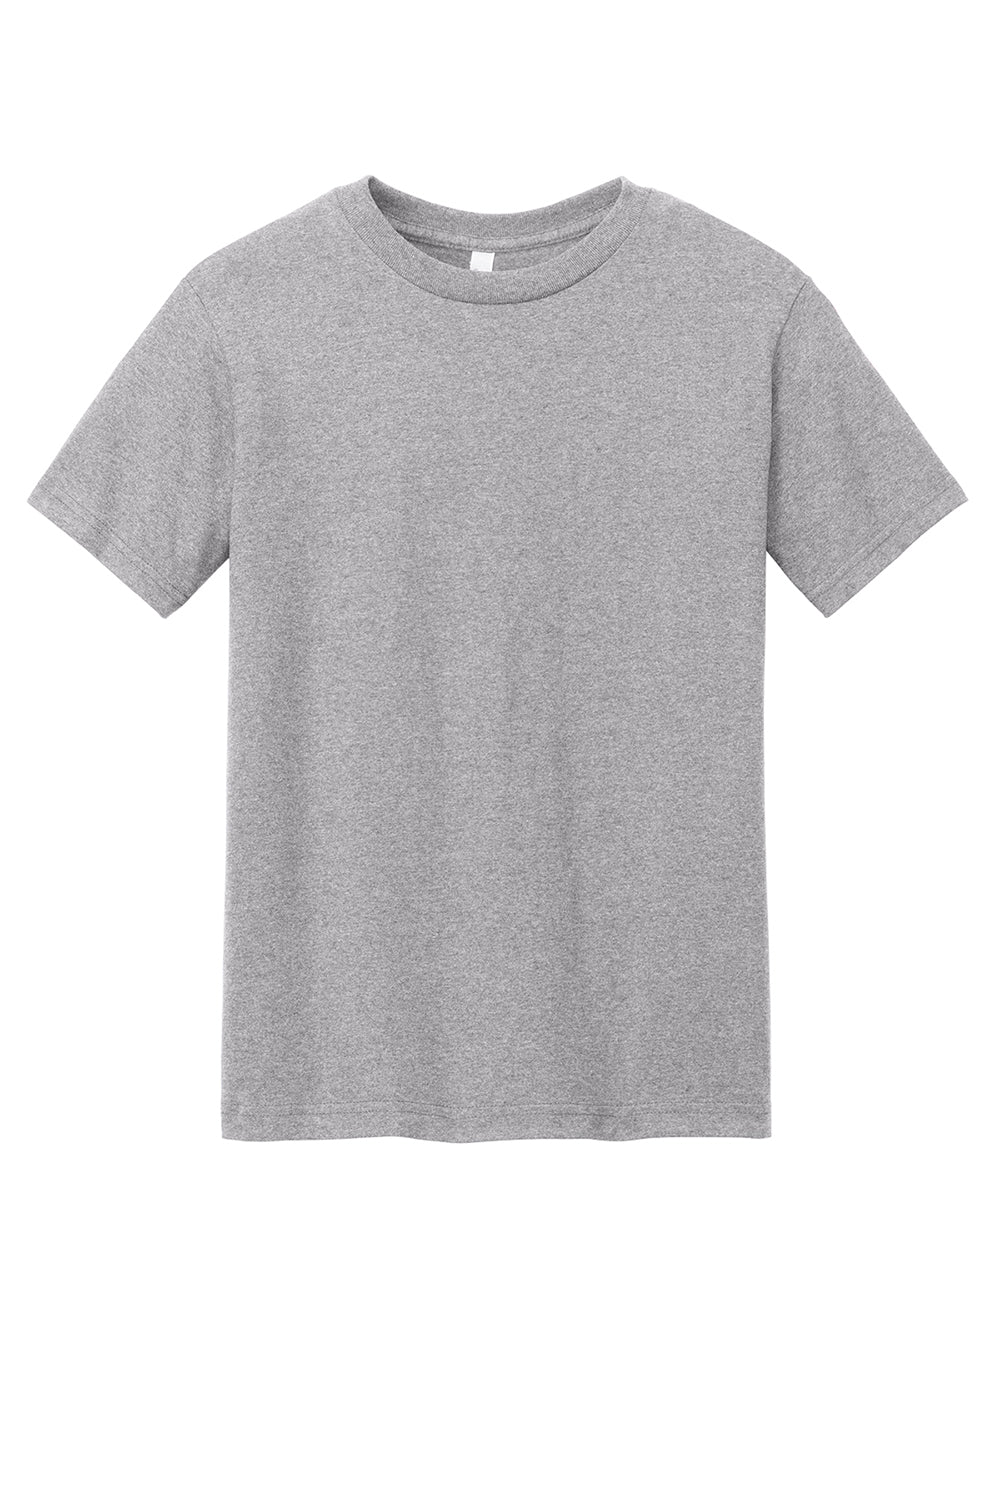 American Apparel 1301/AL1301 Mens Short Sleeve Crewneck T-Shirt Heather Grey Flat Front